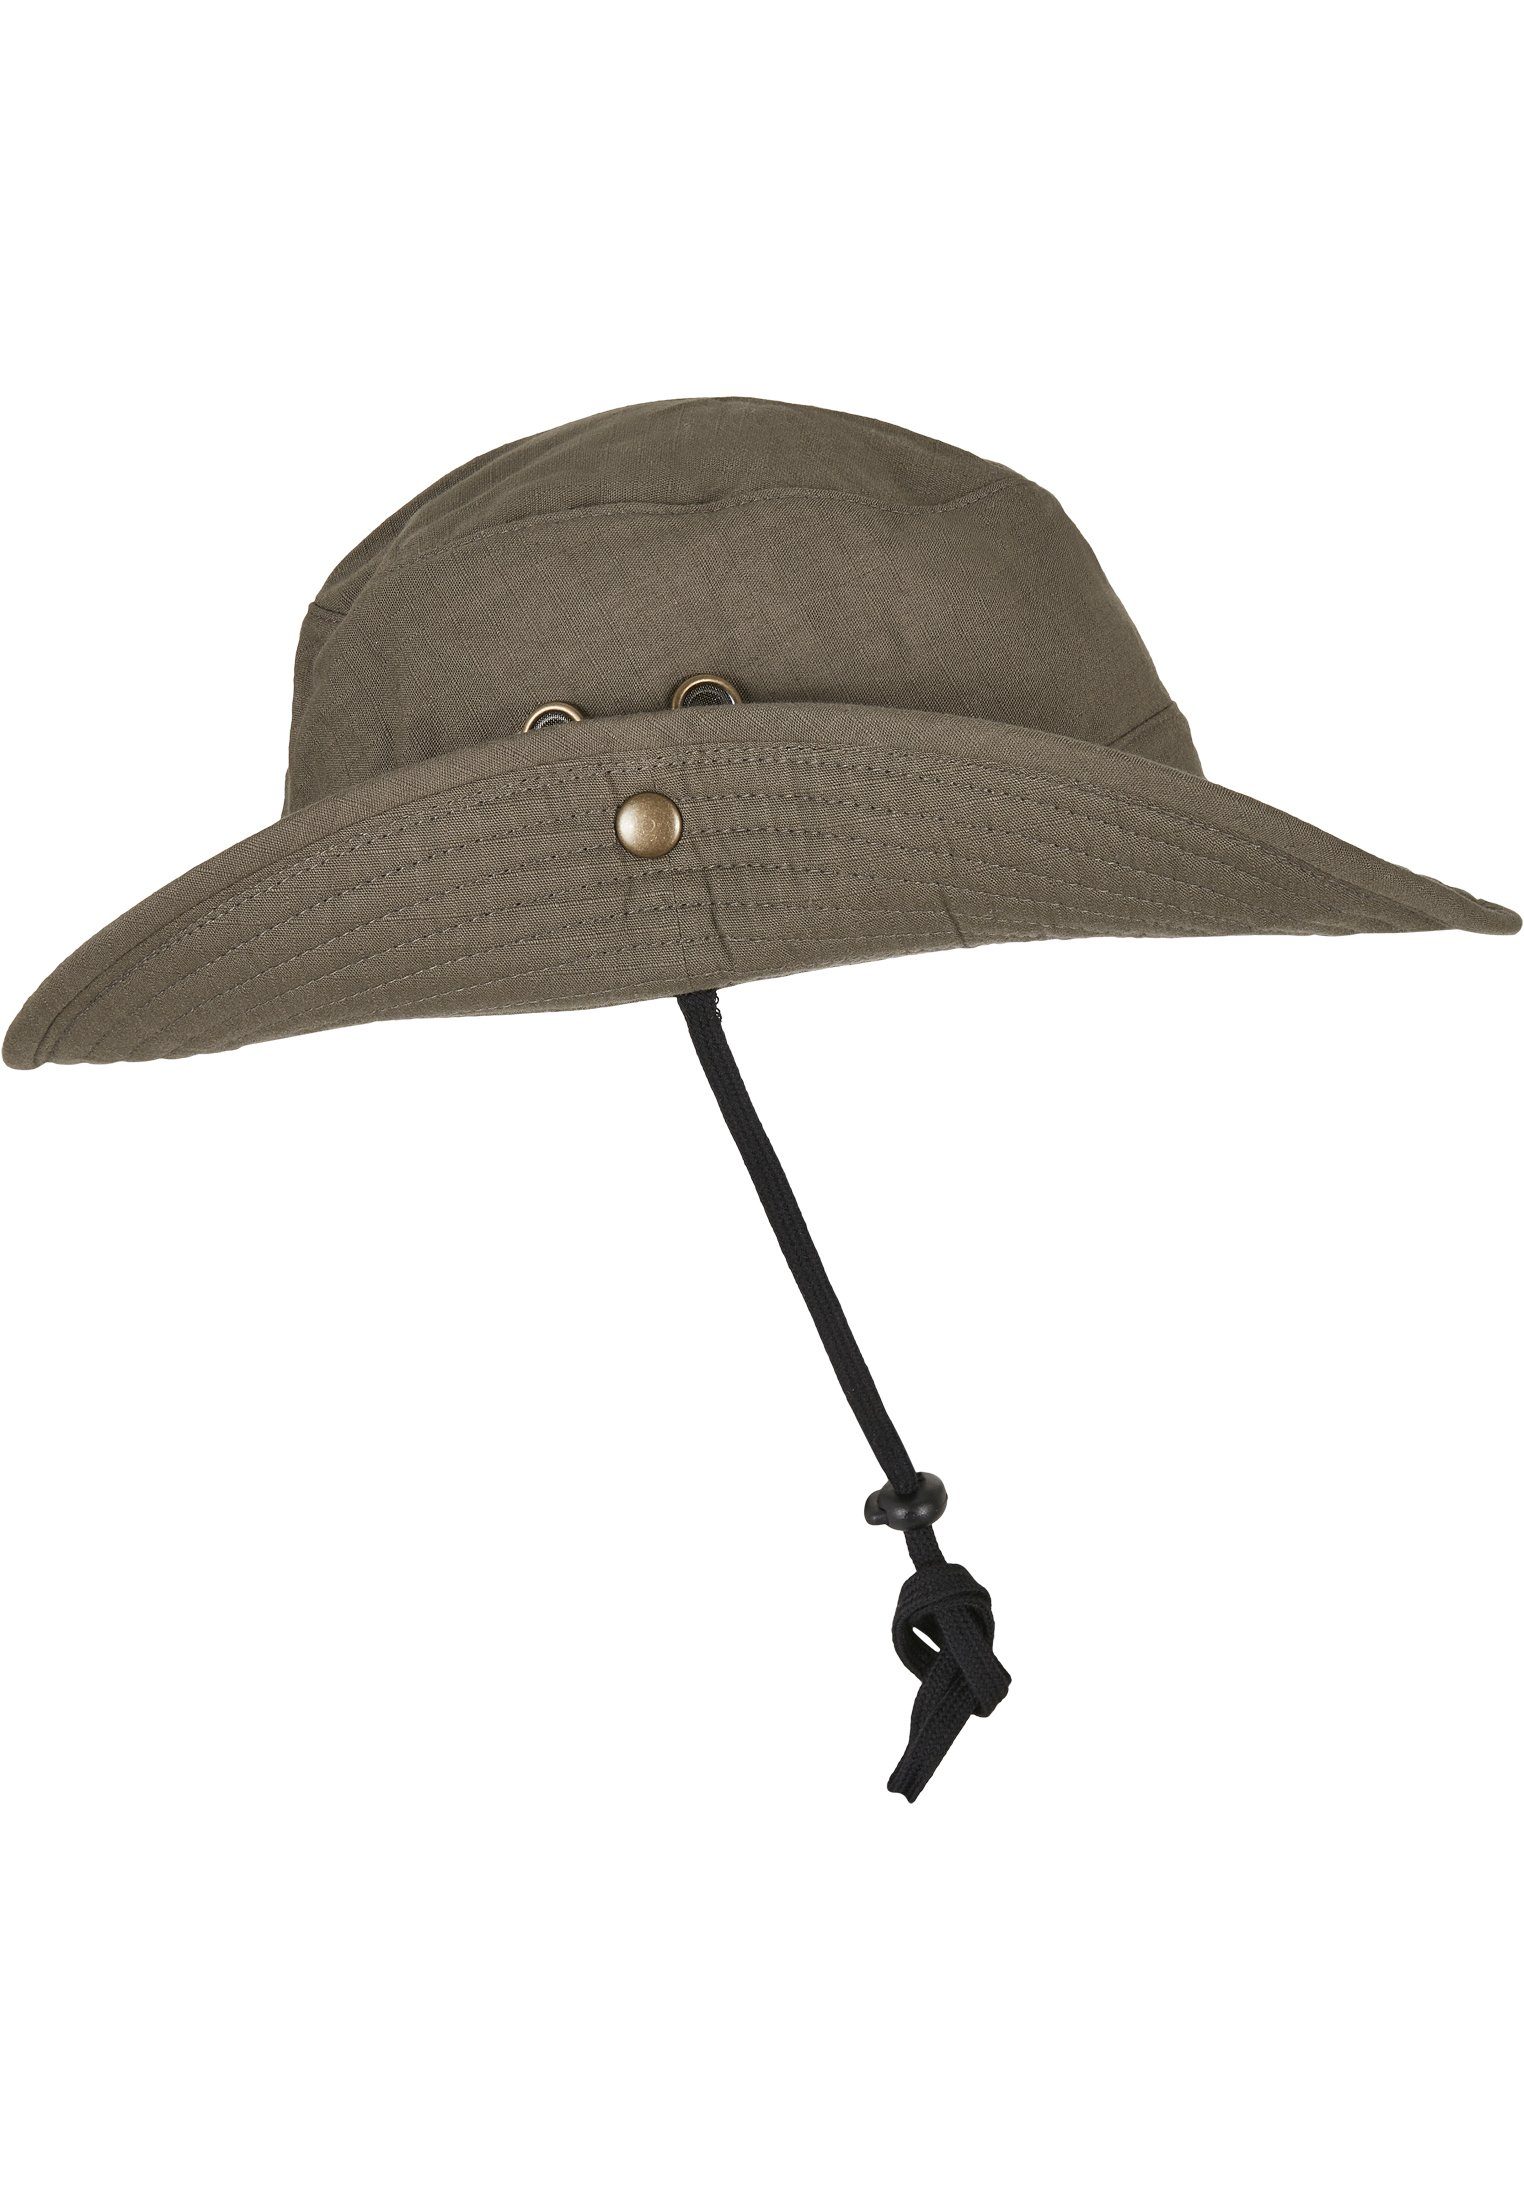 Flex Hat Flexfit darkolive Cap Angler